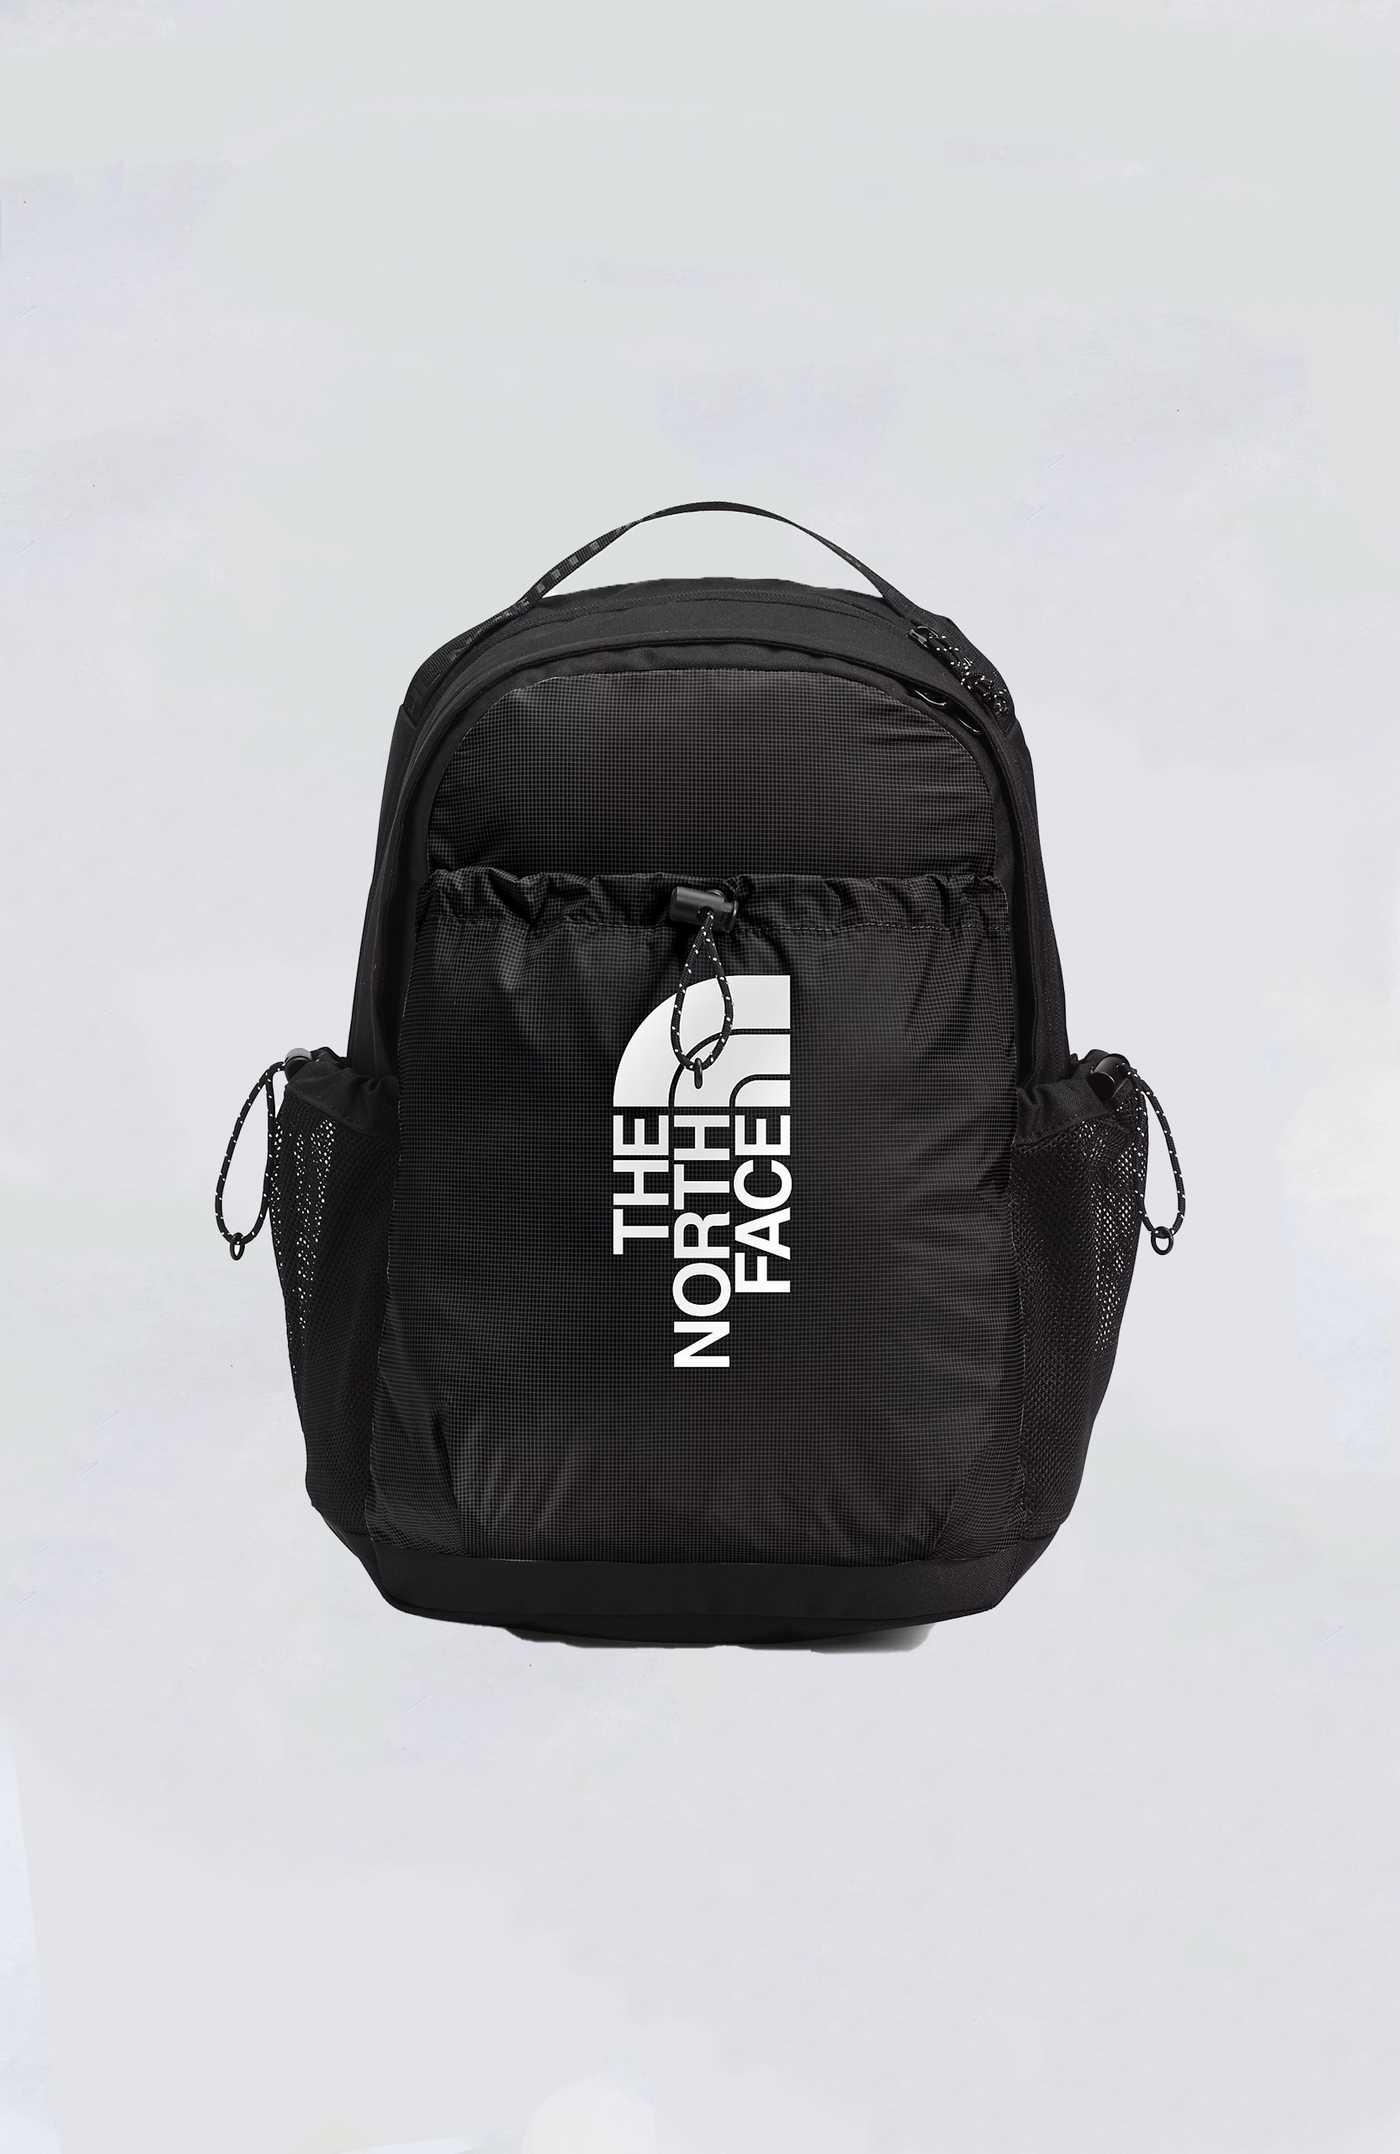 Supreme The North Face S Logo Shoulder Bag Review - YouTube